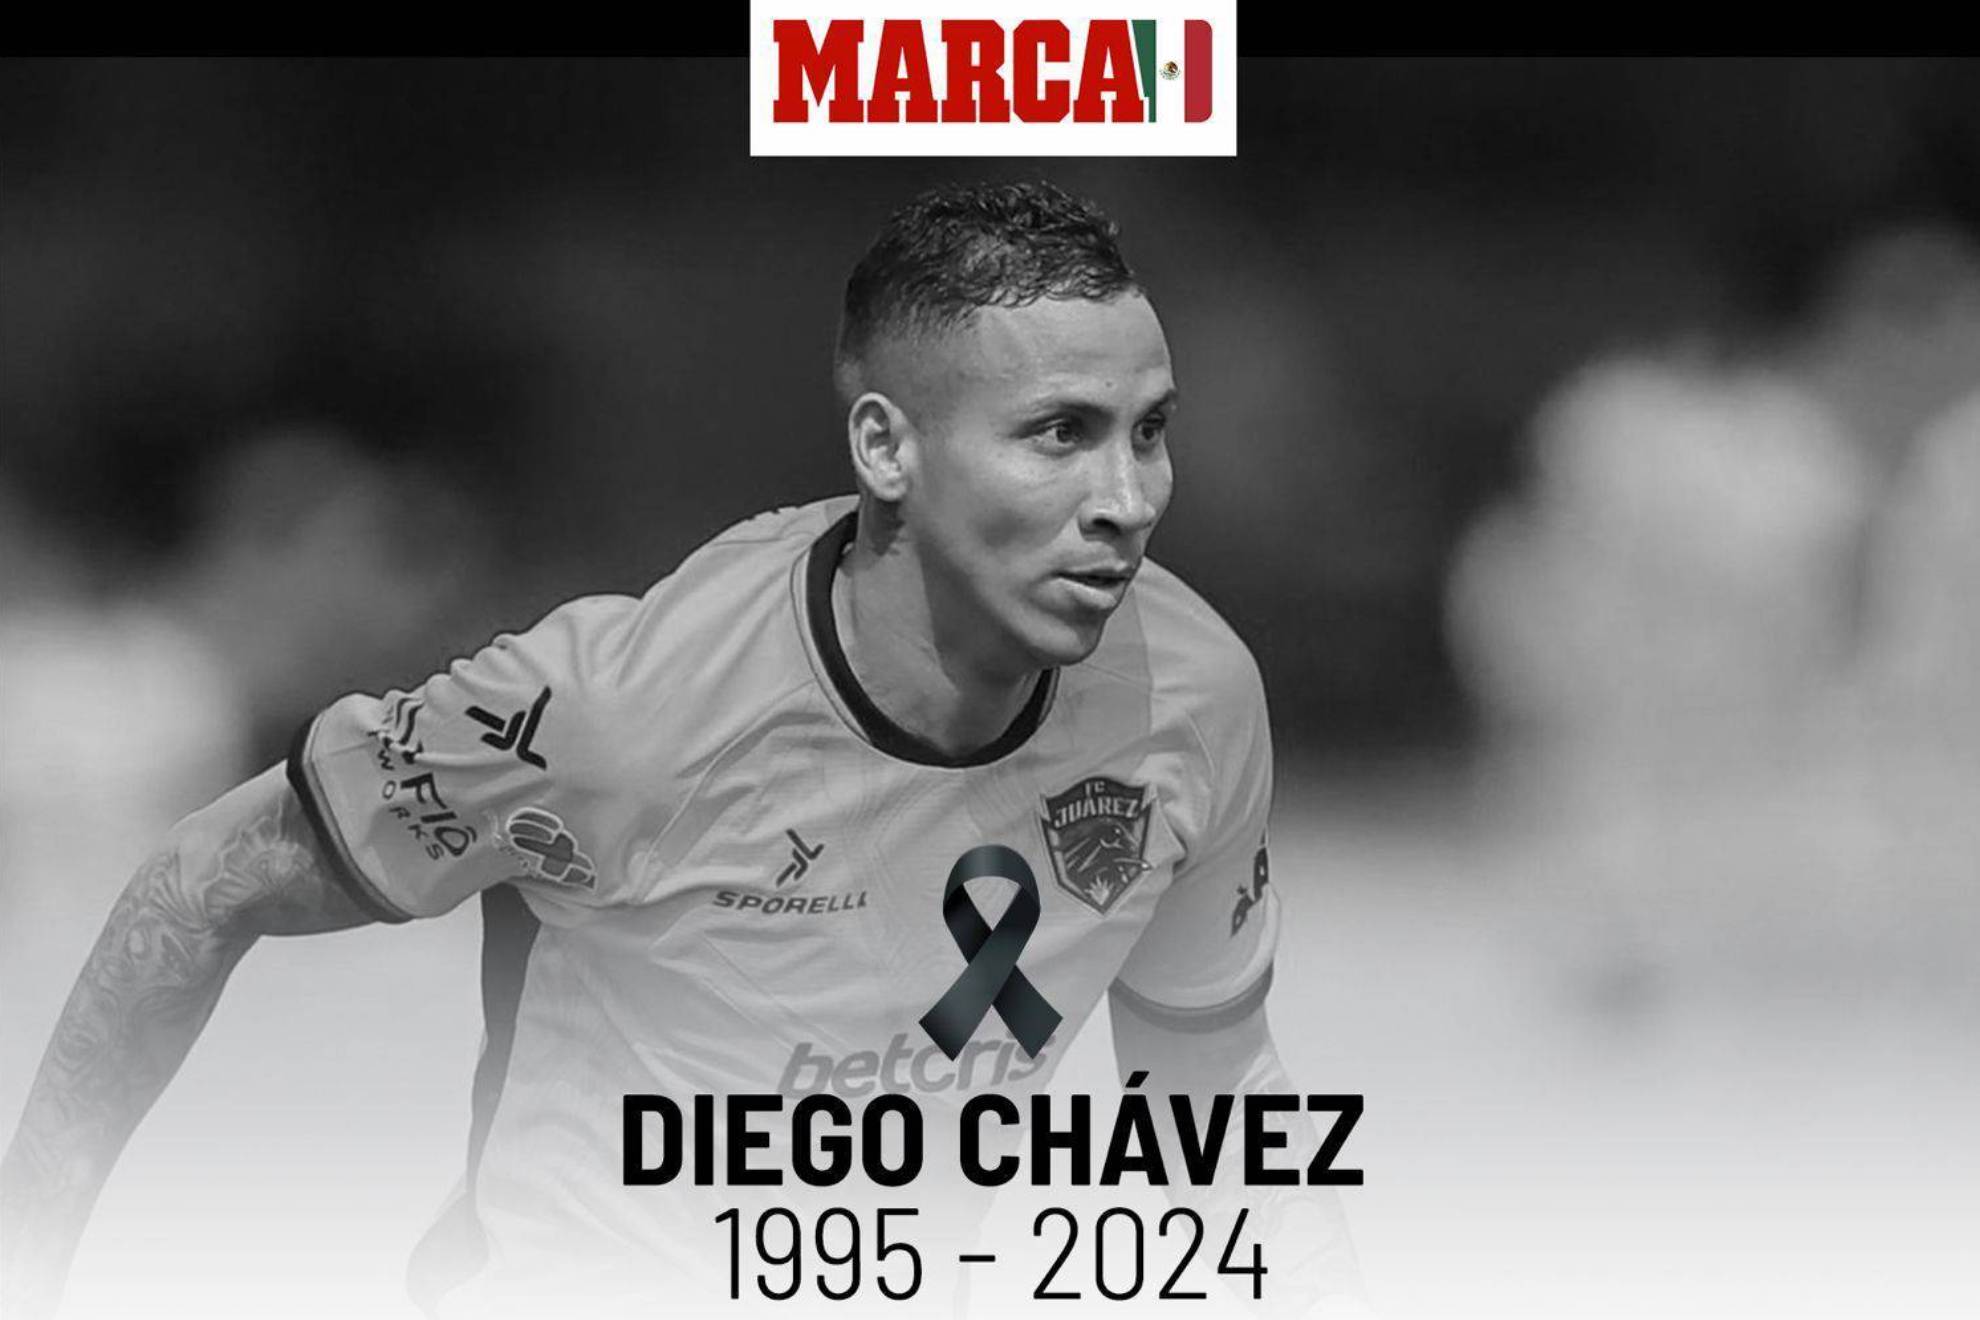 Diego Chvez